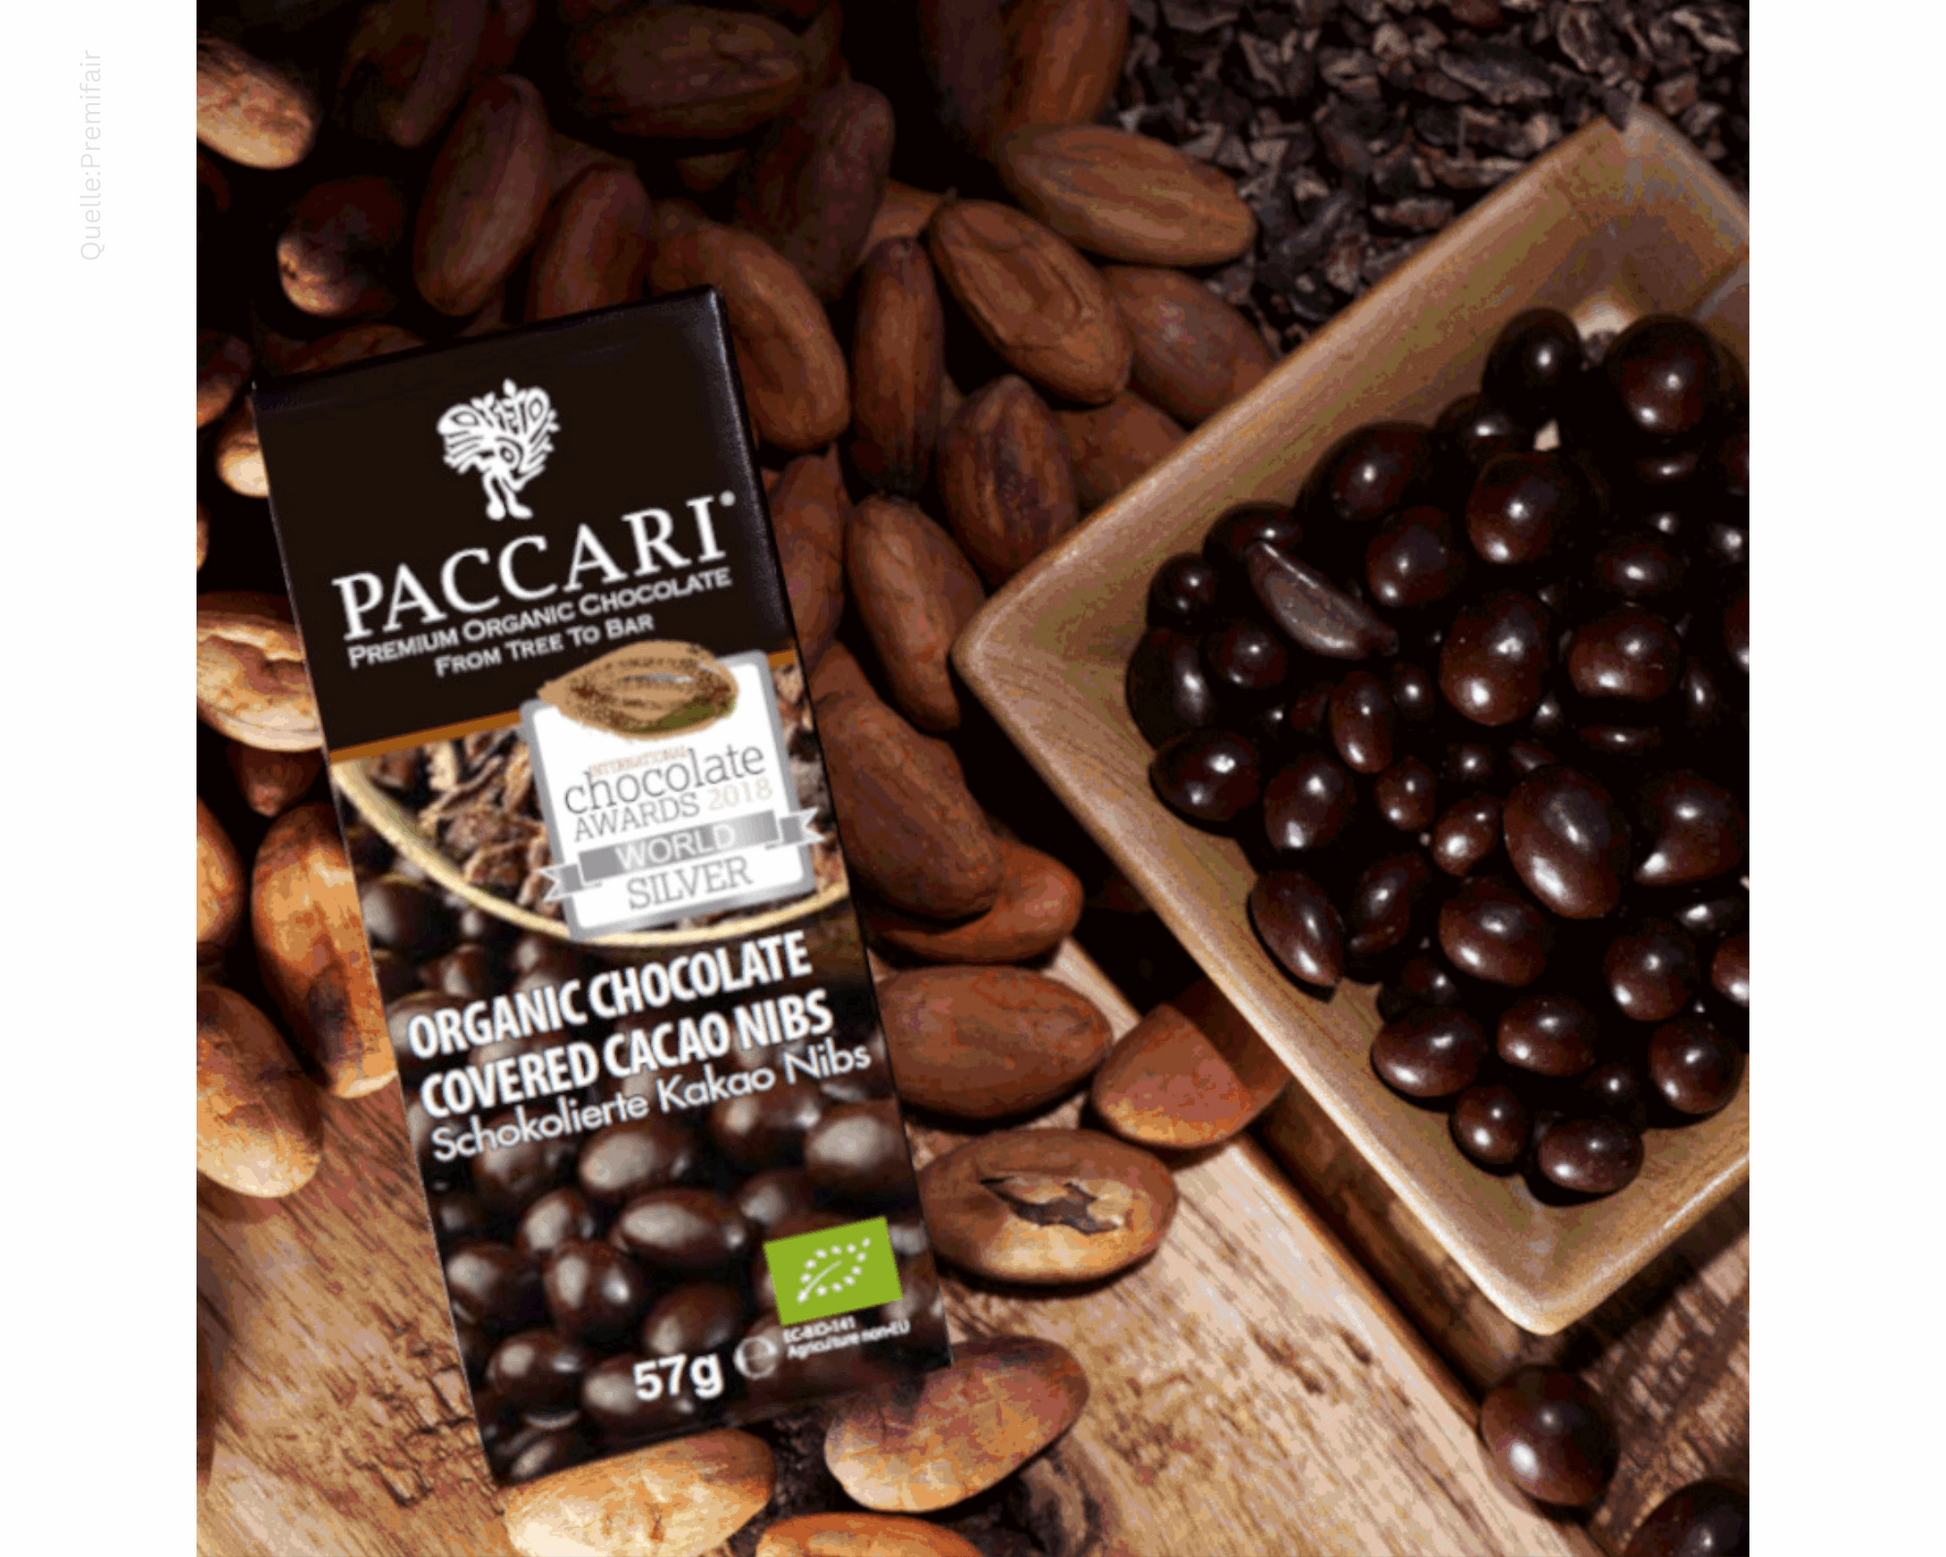 premifair fairtrade schokolade startup snack snackbox gesund layana life